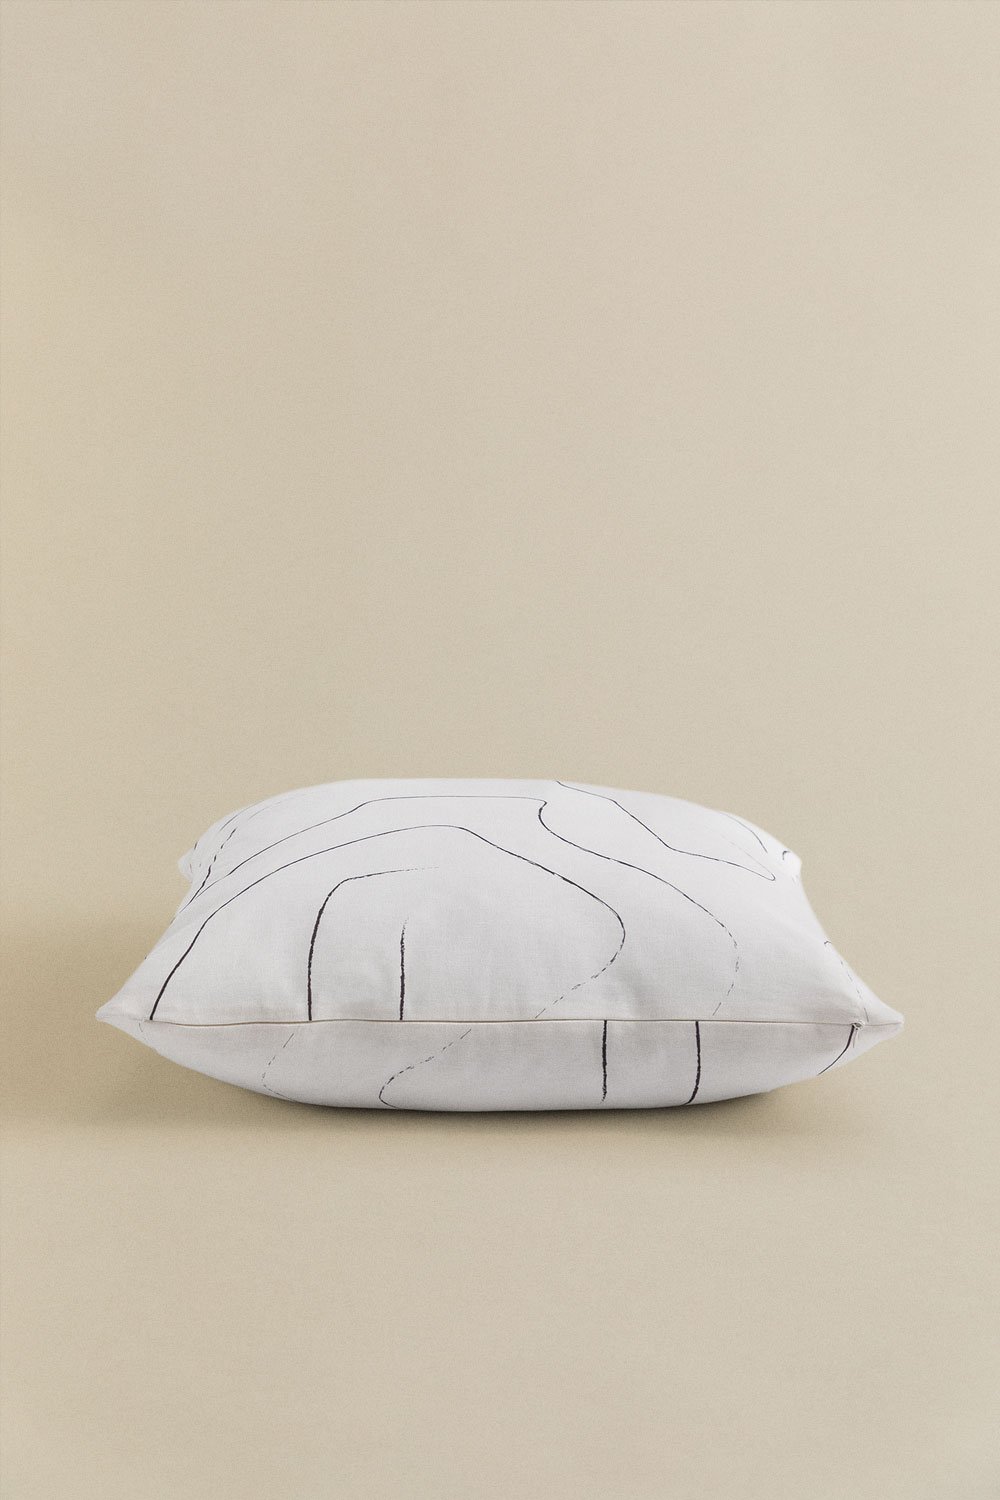 Federa per cuscino quadrata in cotone (60x60 cm) Pokou Style